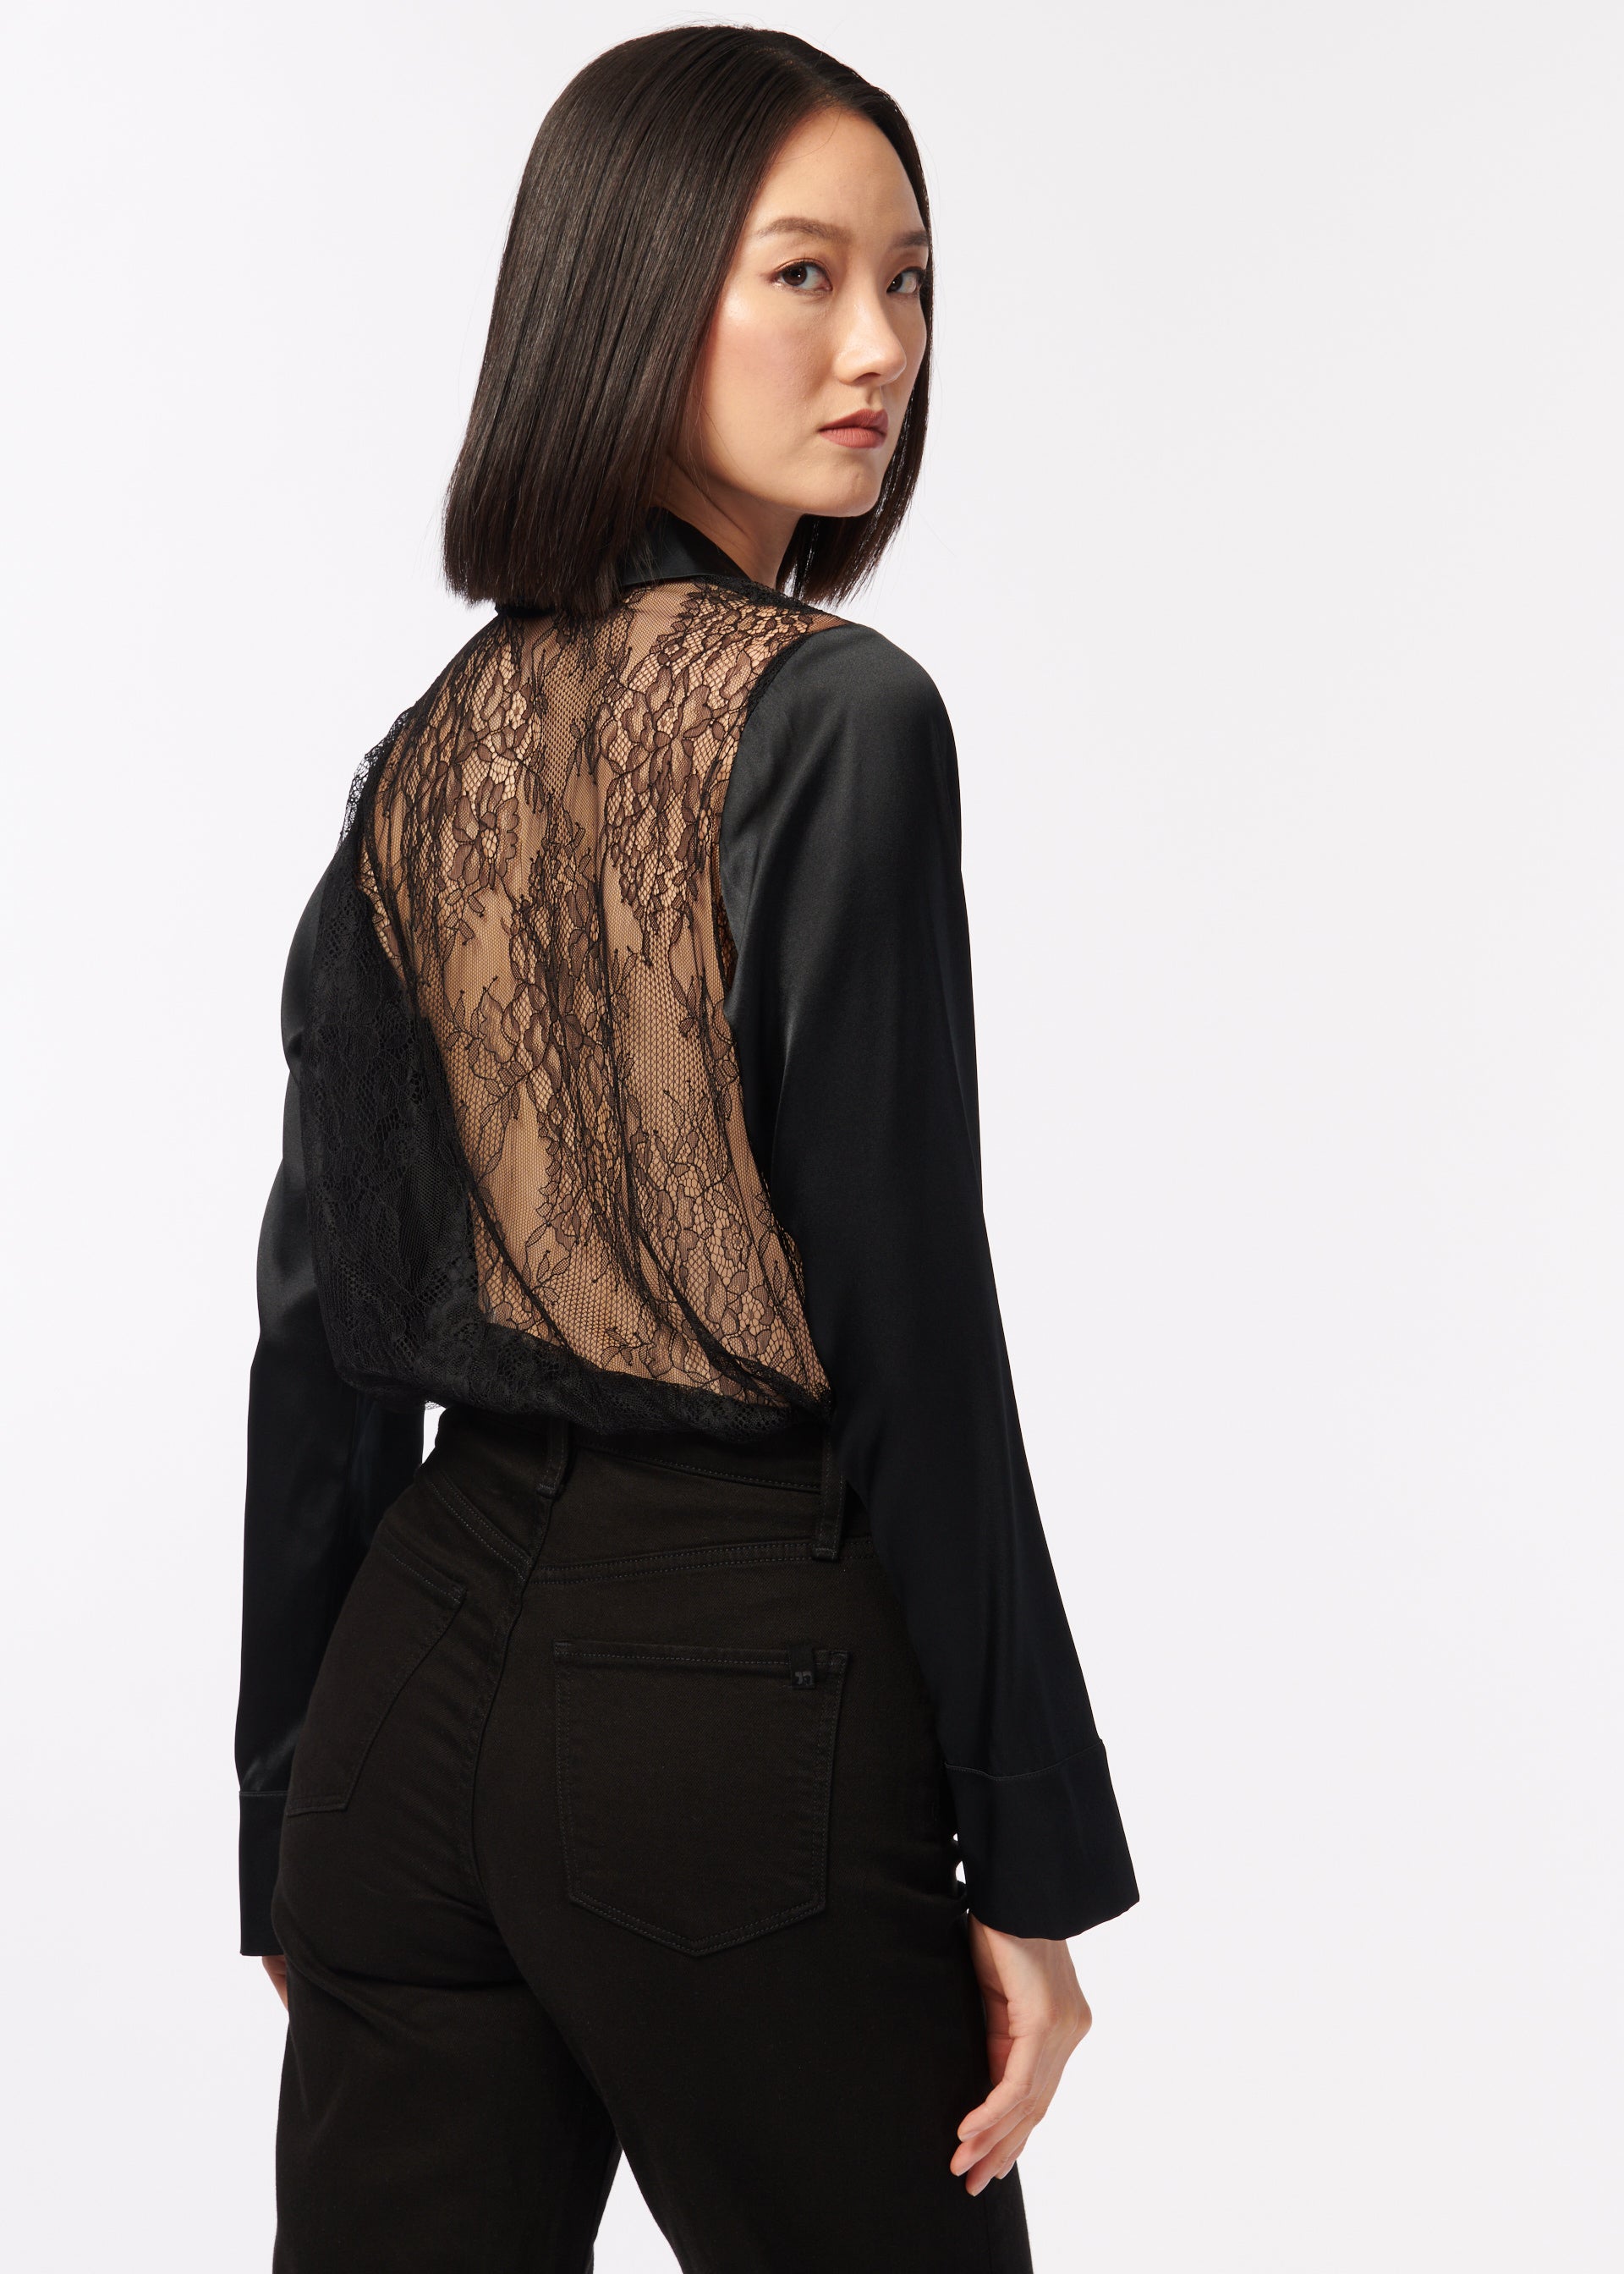 Cami NYC L40708 Women's Briar Black Lace Corset Bodysuit Size XS 